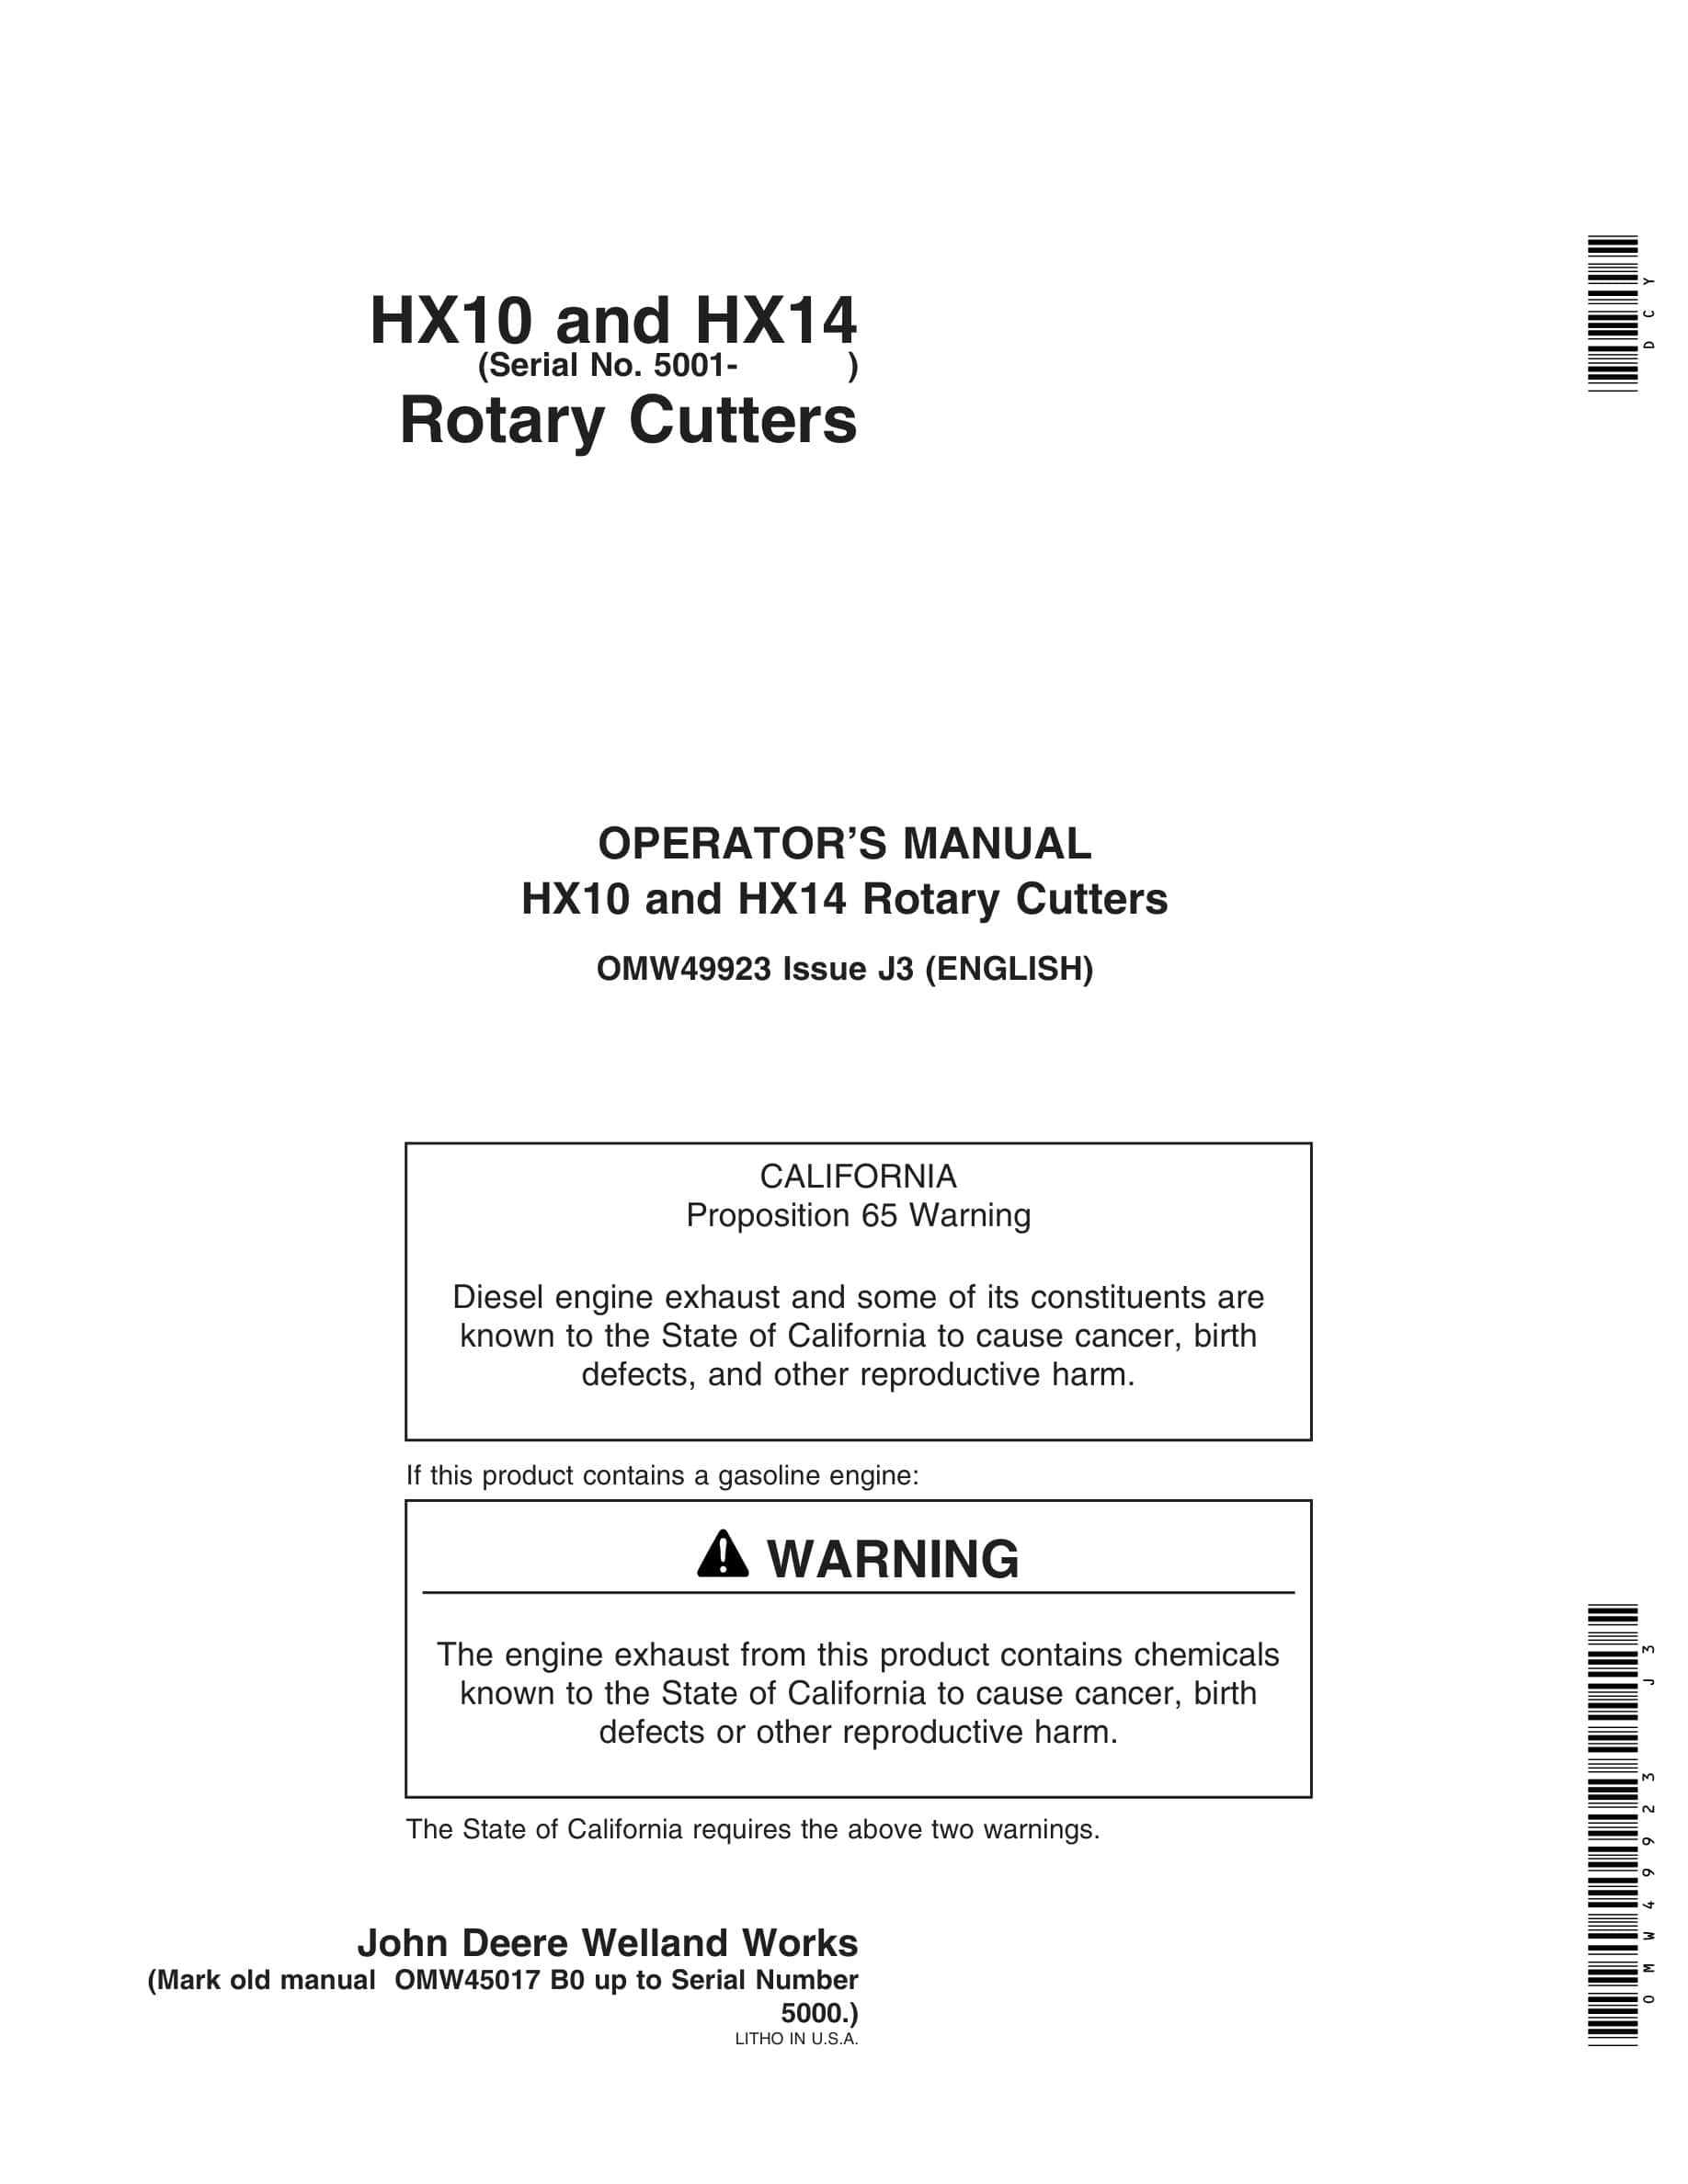 John Deere HX10 and HX14 Rotary Cutter Operator Manual OMW49923-1